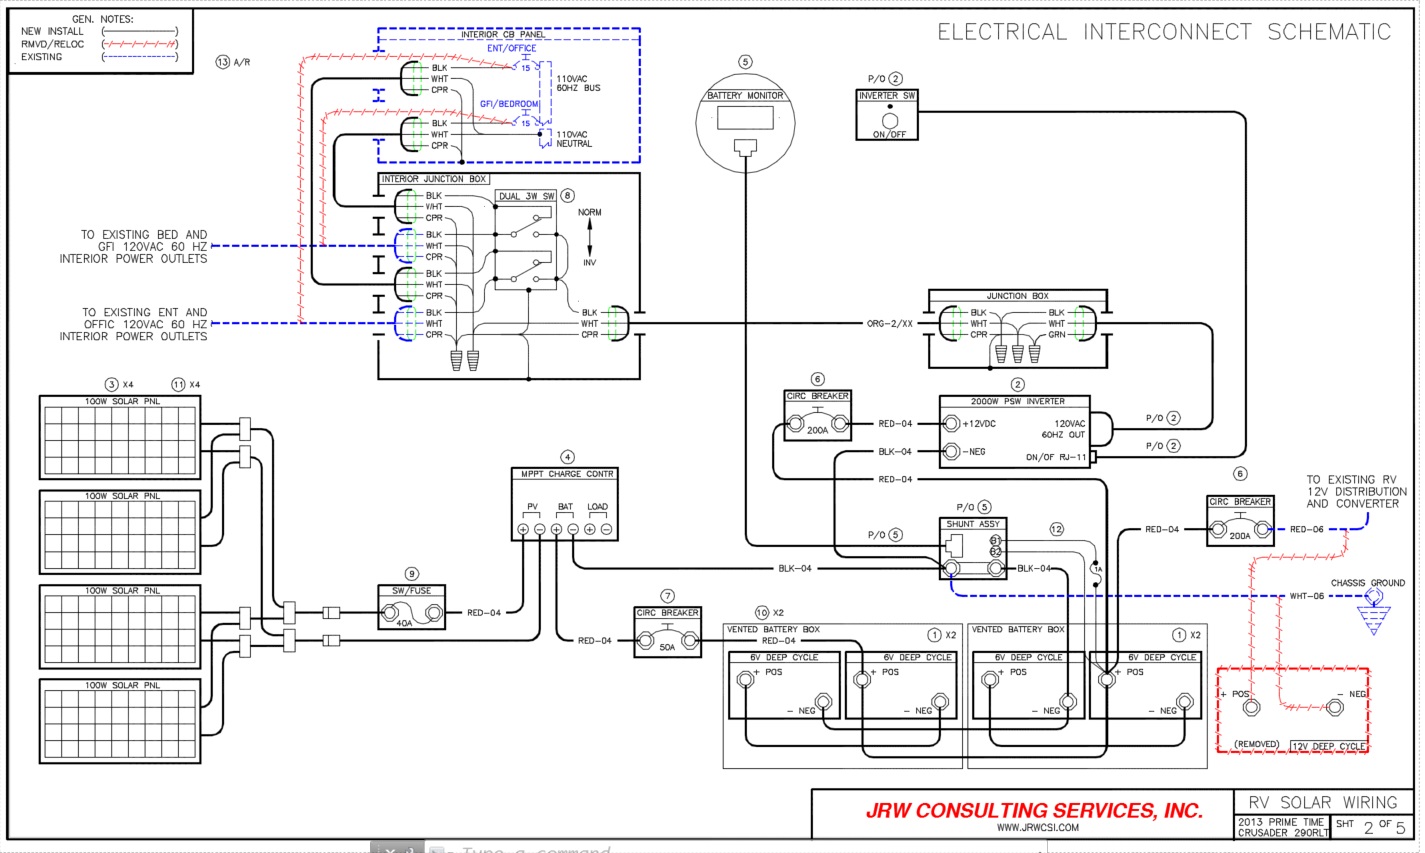 RV POWER UPGRADE - Live, Breathe, Move basic rv wiring diagram 